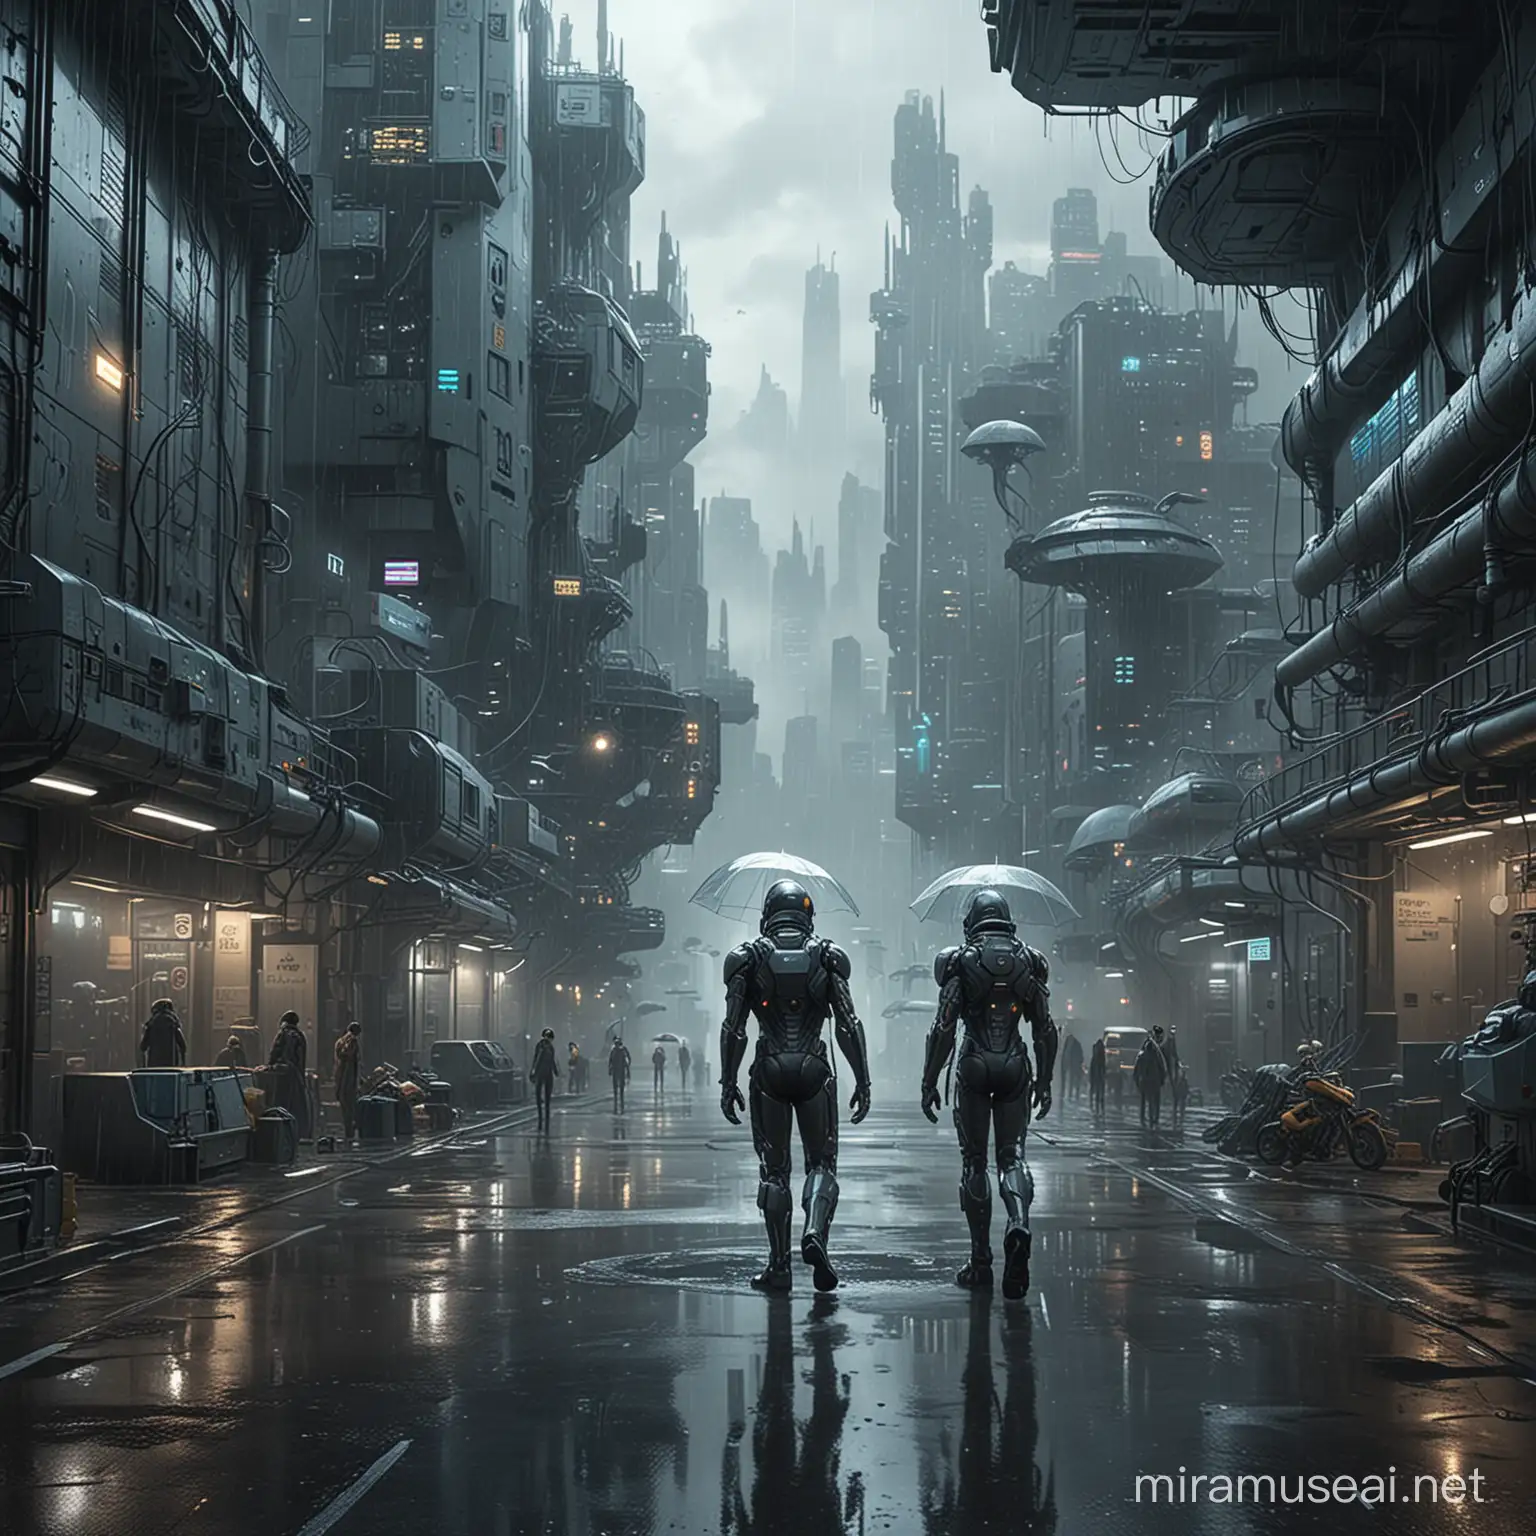 Futuristic City Humanoids with Superpowers Avoiding Rain in Laboratory